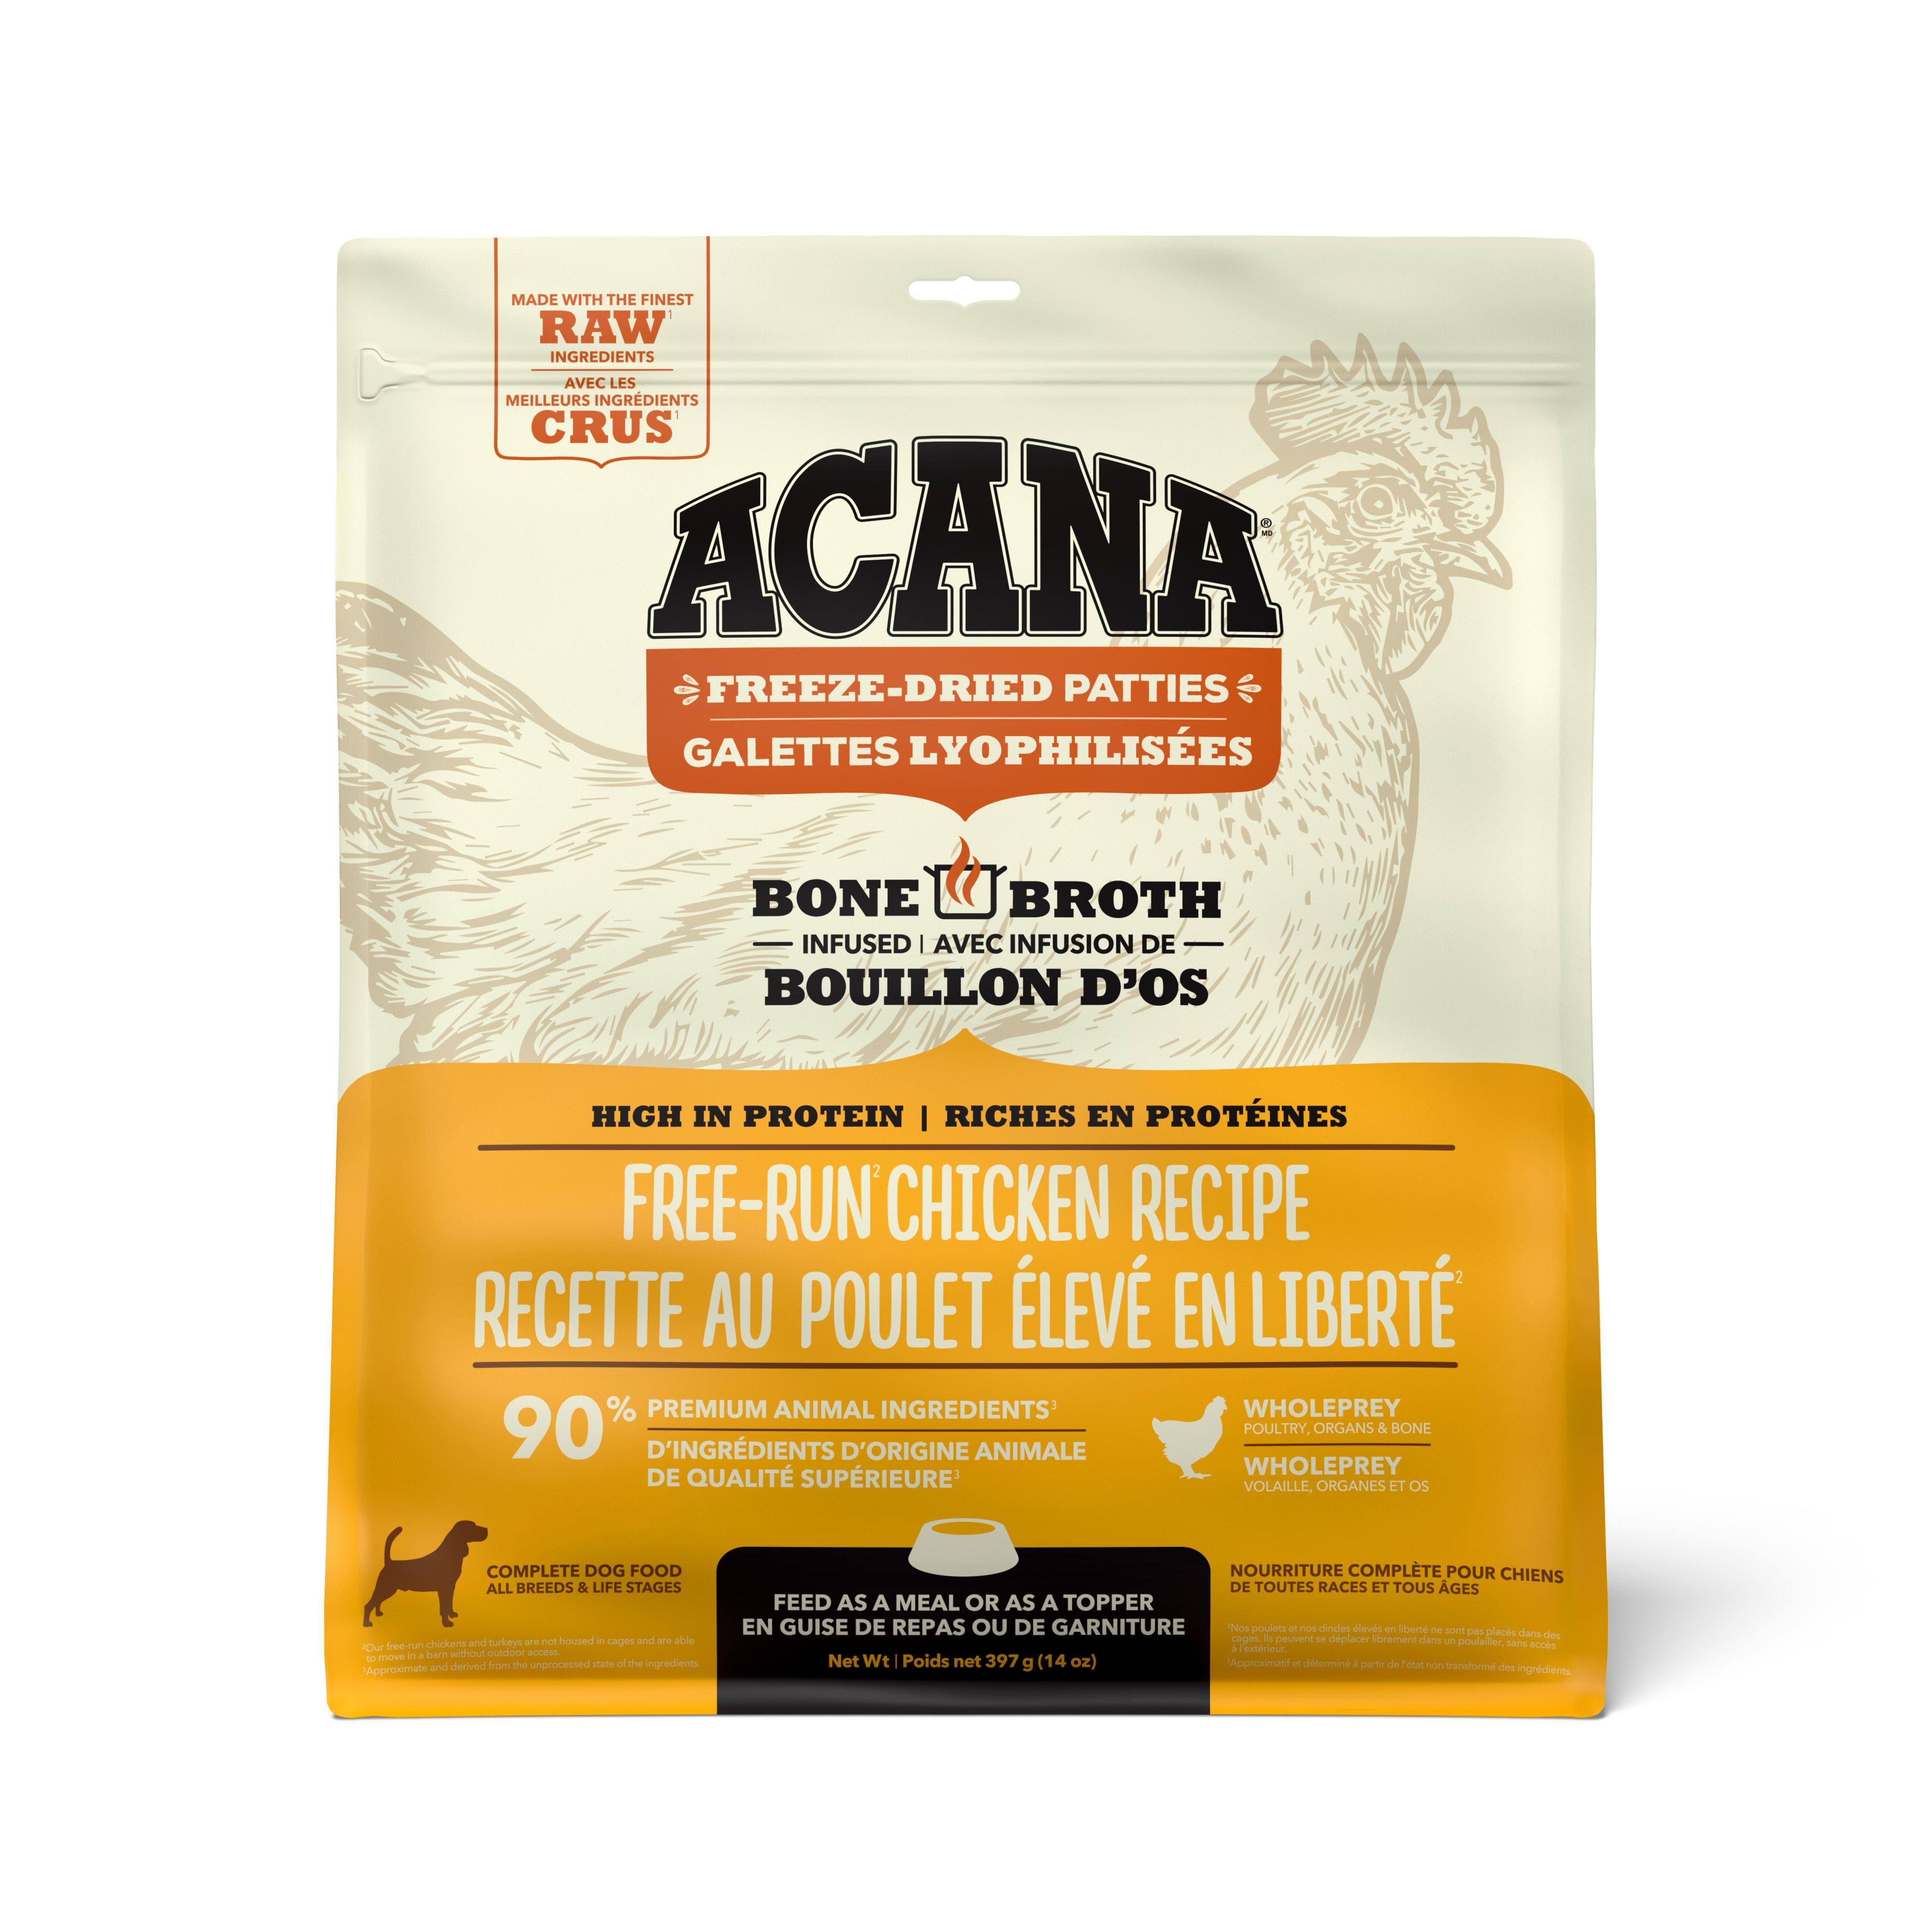 Acana Freeze-Dried Patties Dog Food - Free-Run Chicken Recipe - 14 oz. Bag